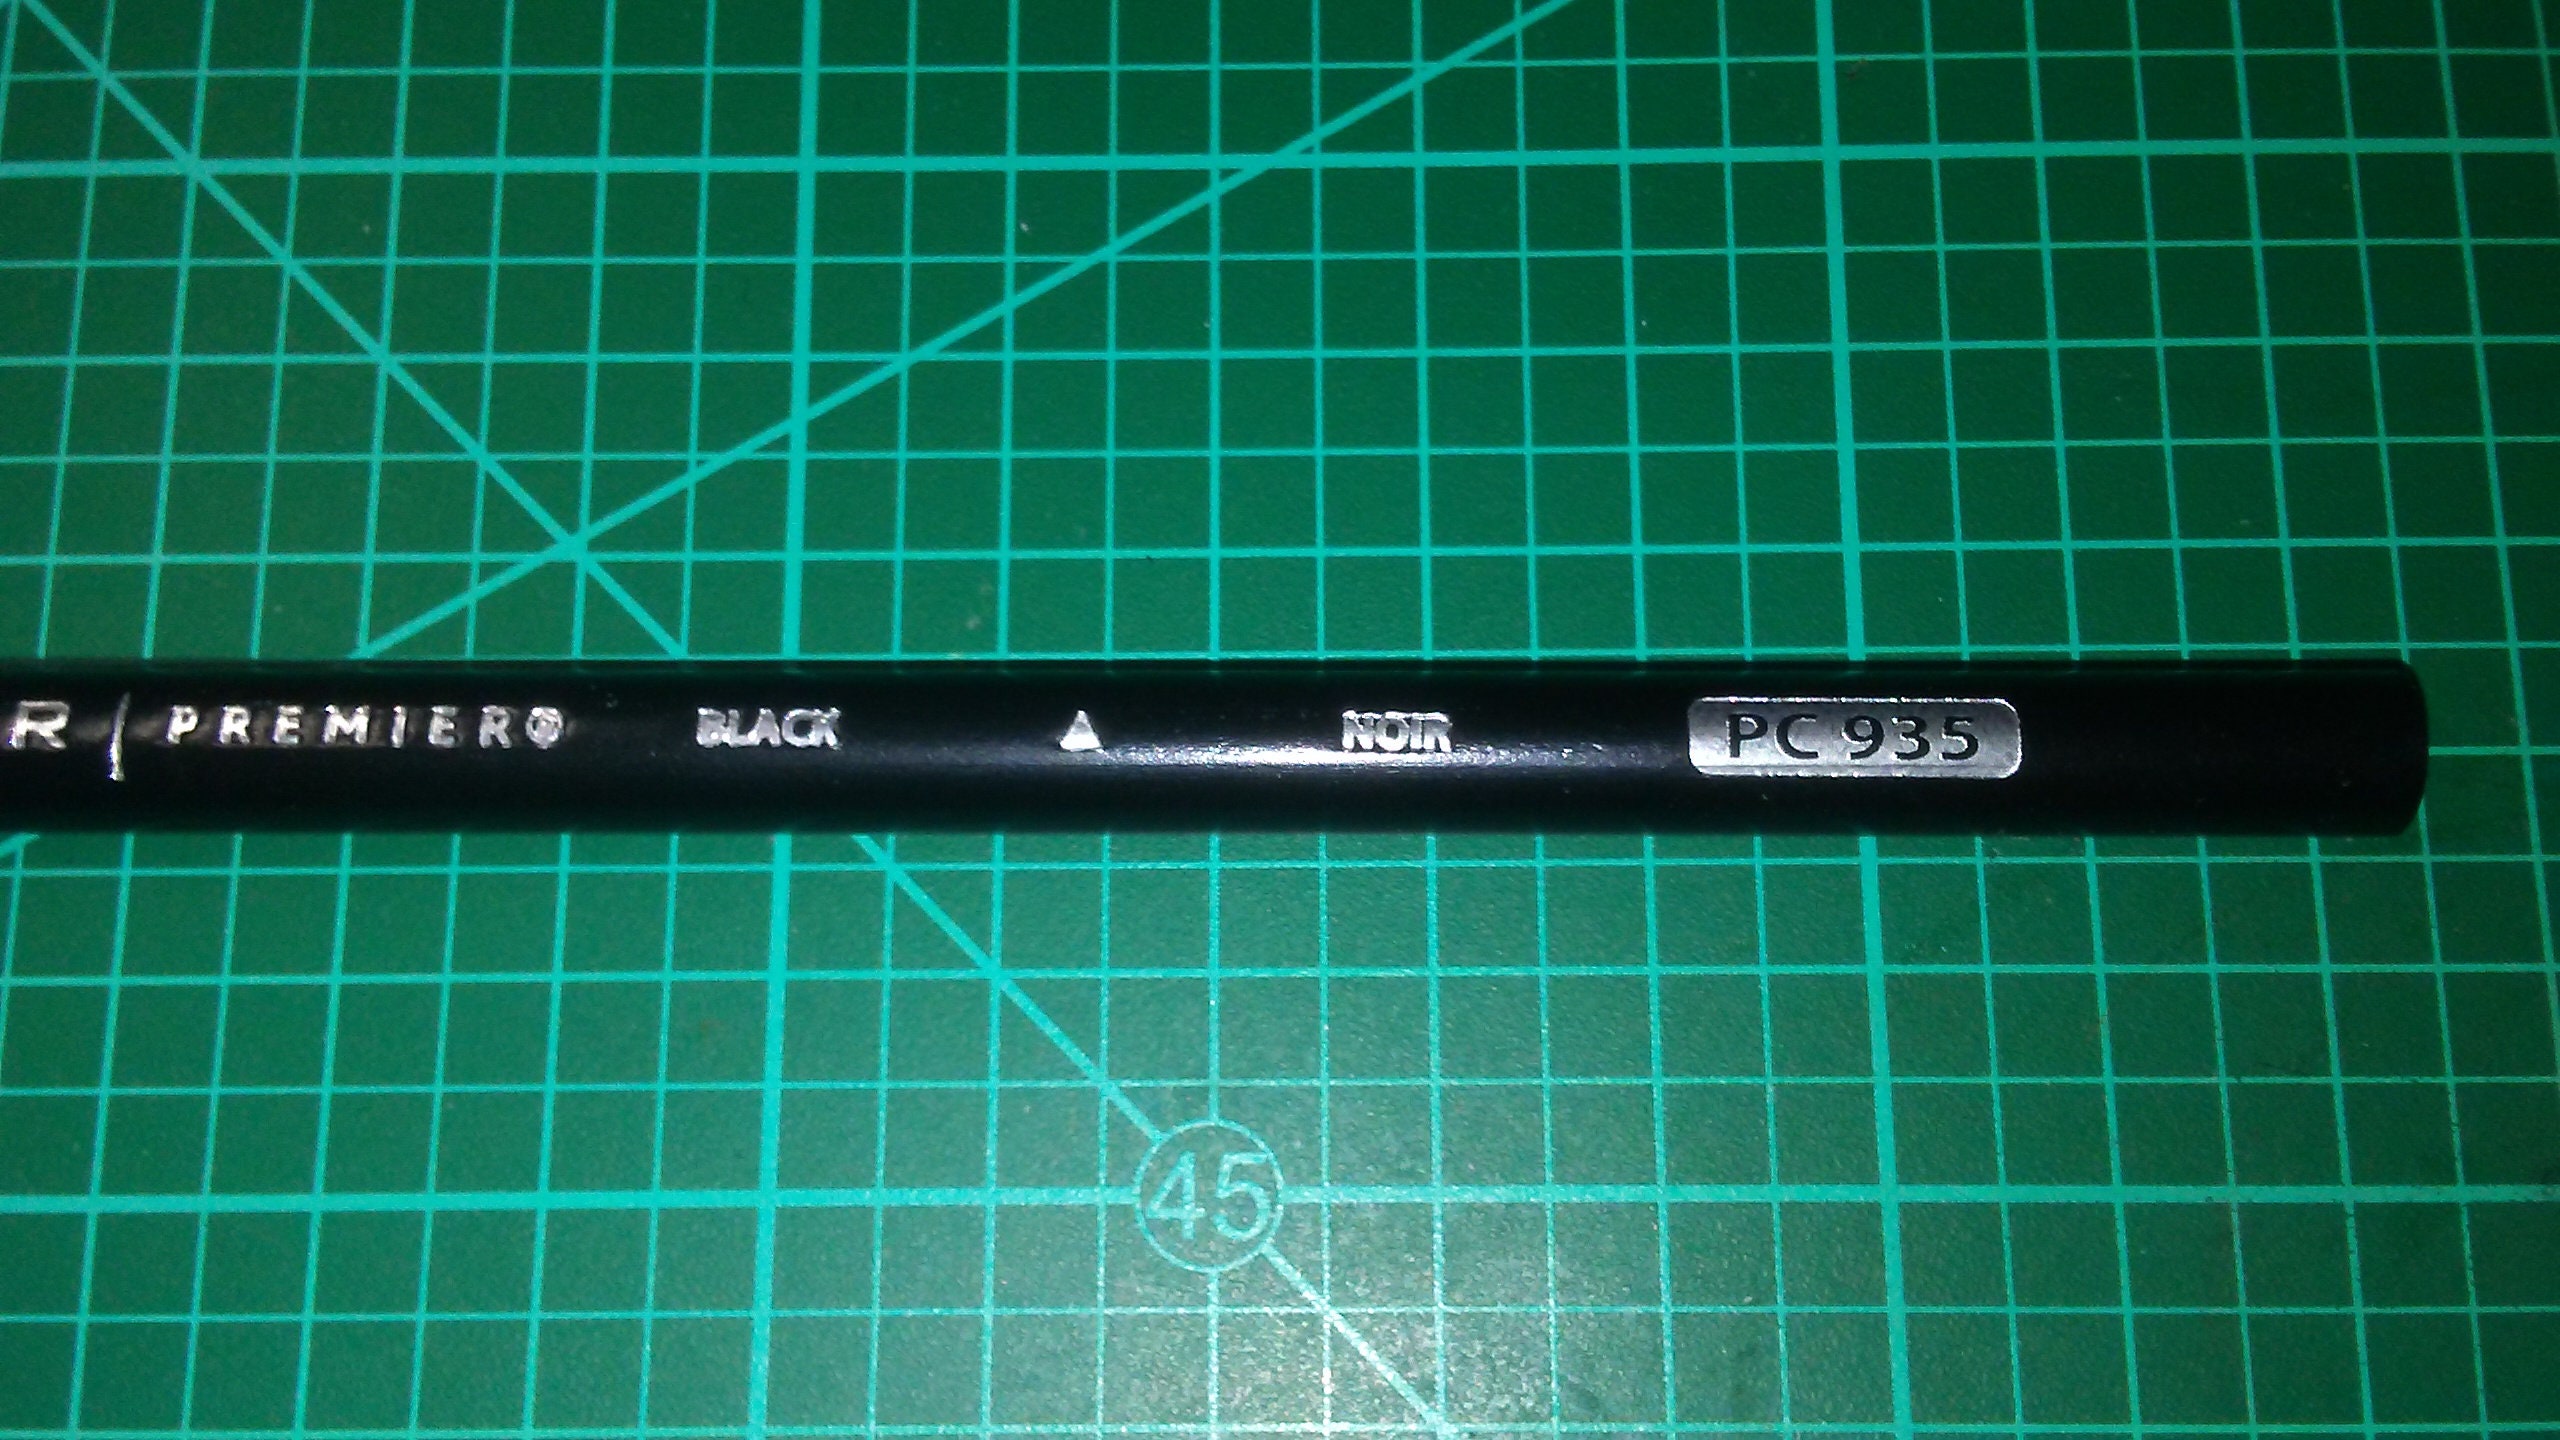 Prismacolor Colored Pencil PC935 Black - One Dozen Pencils